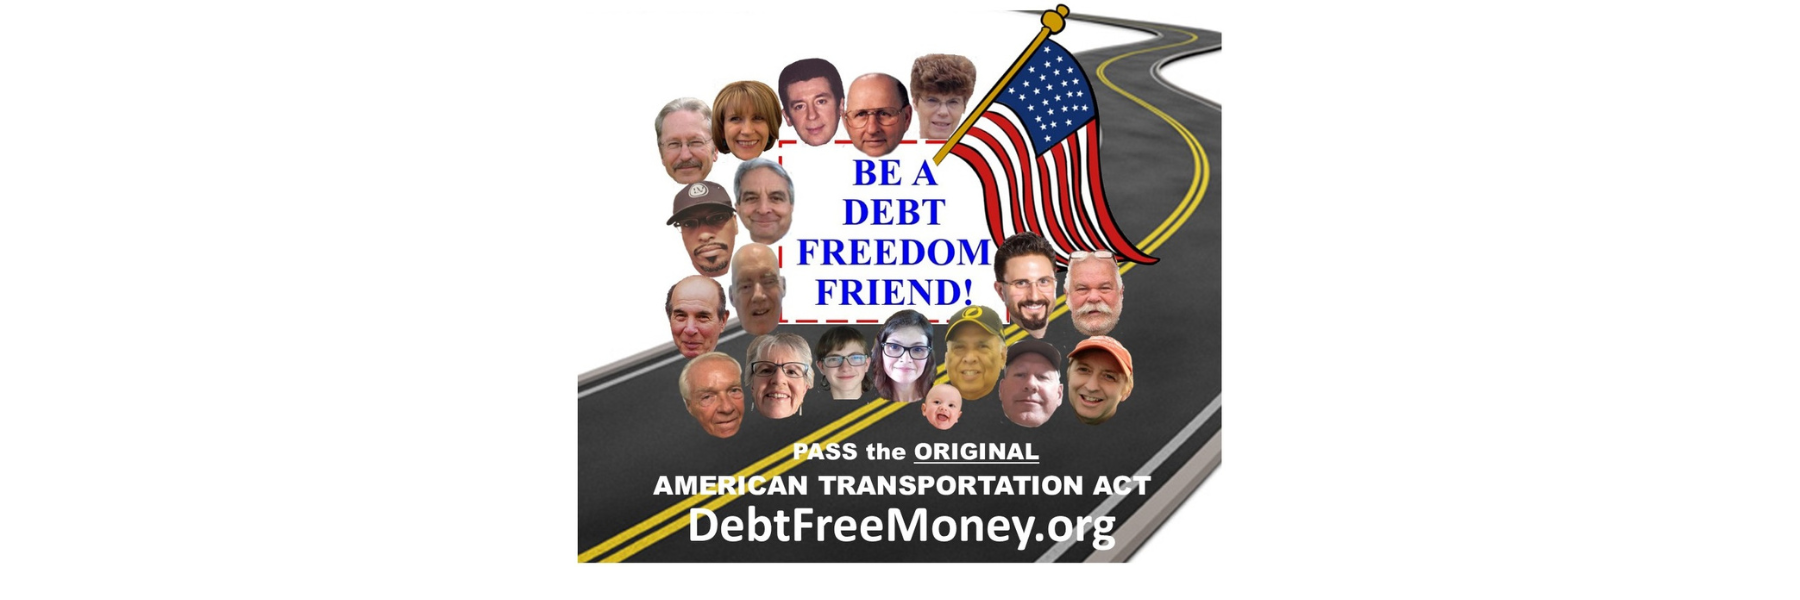 DebtFreeMoney.org